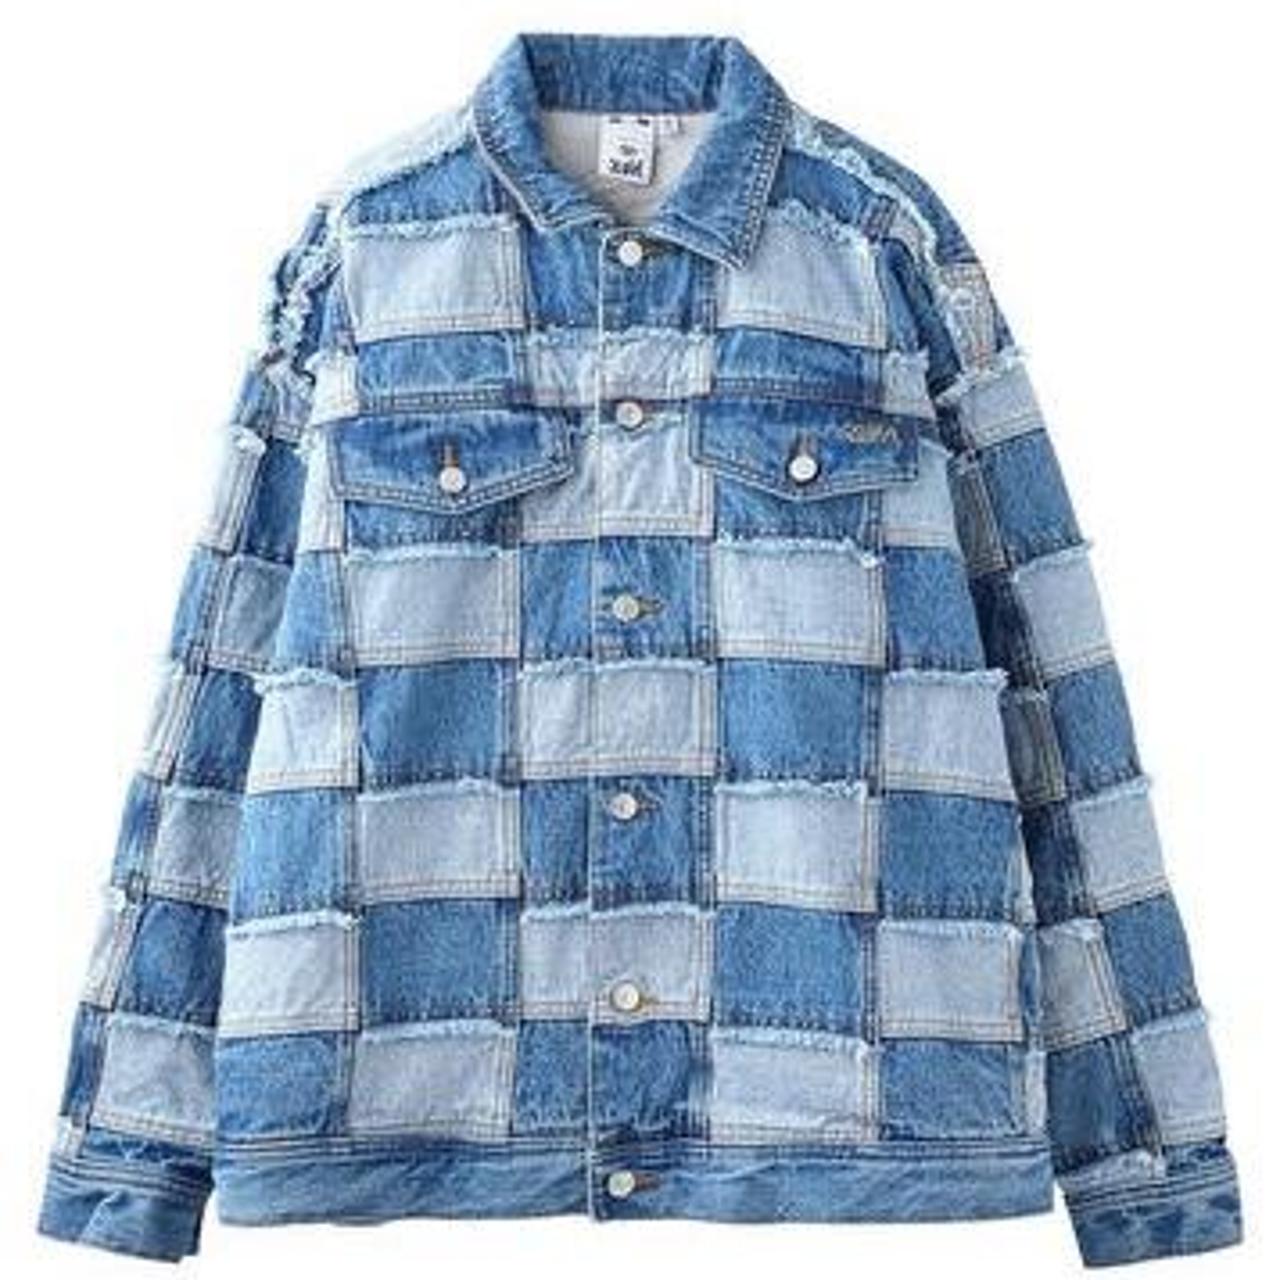 Product Image 2 - x-girl patchwork denim jacket retail